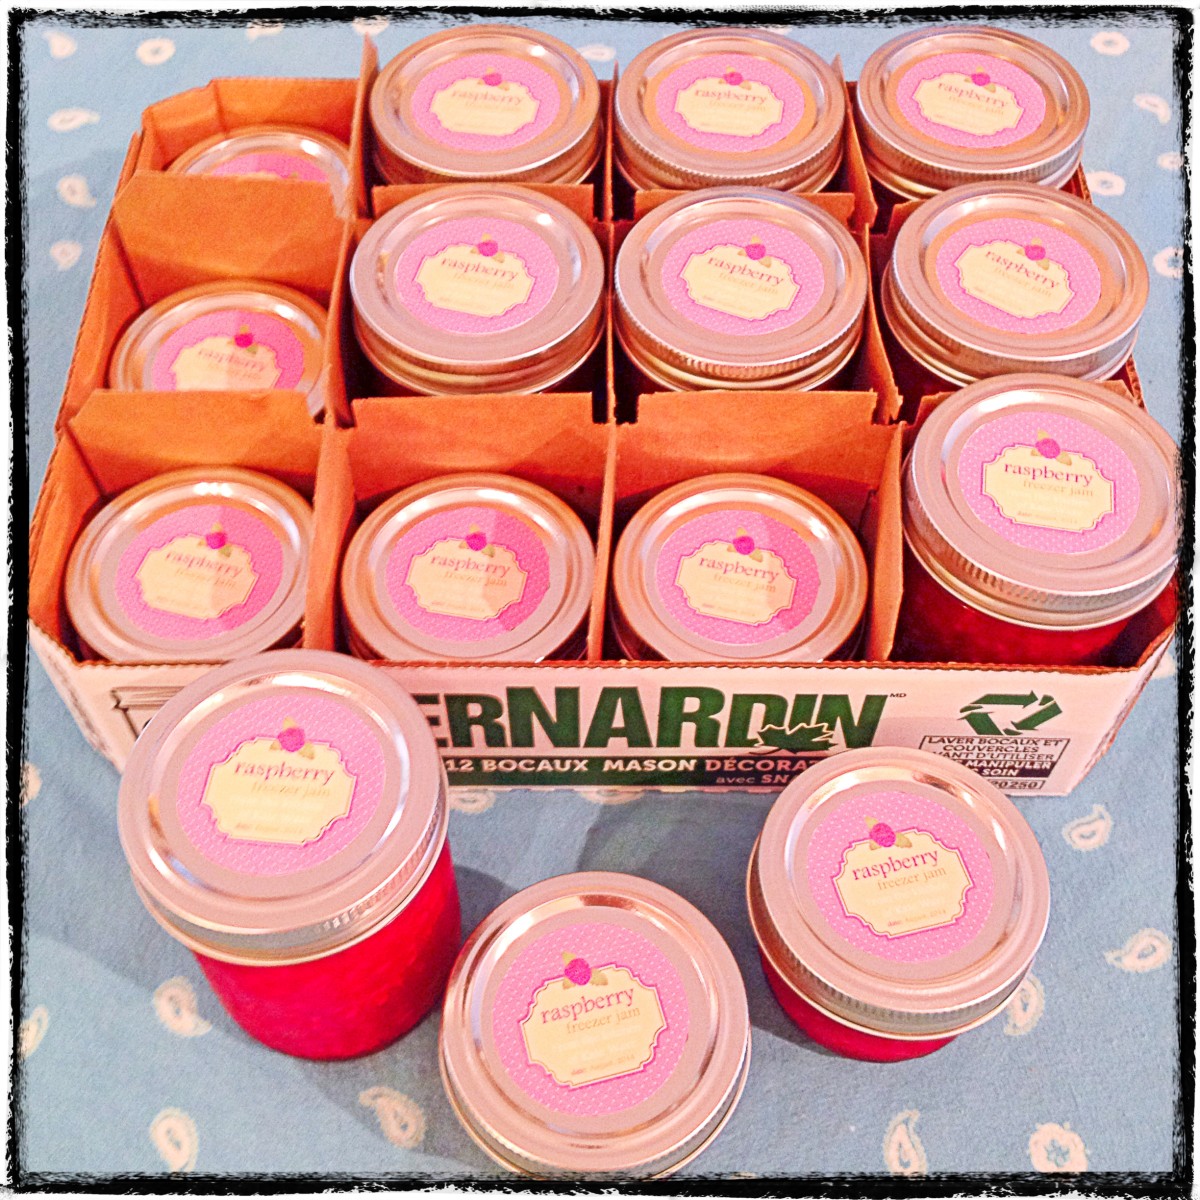 labels-for-home-made-raspberry-freezer-jam-katewares